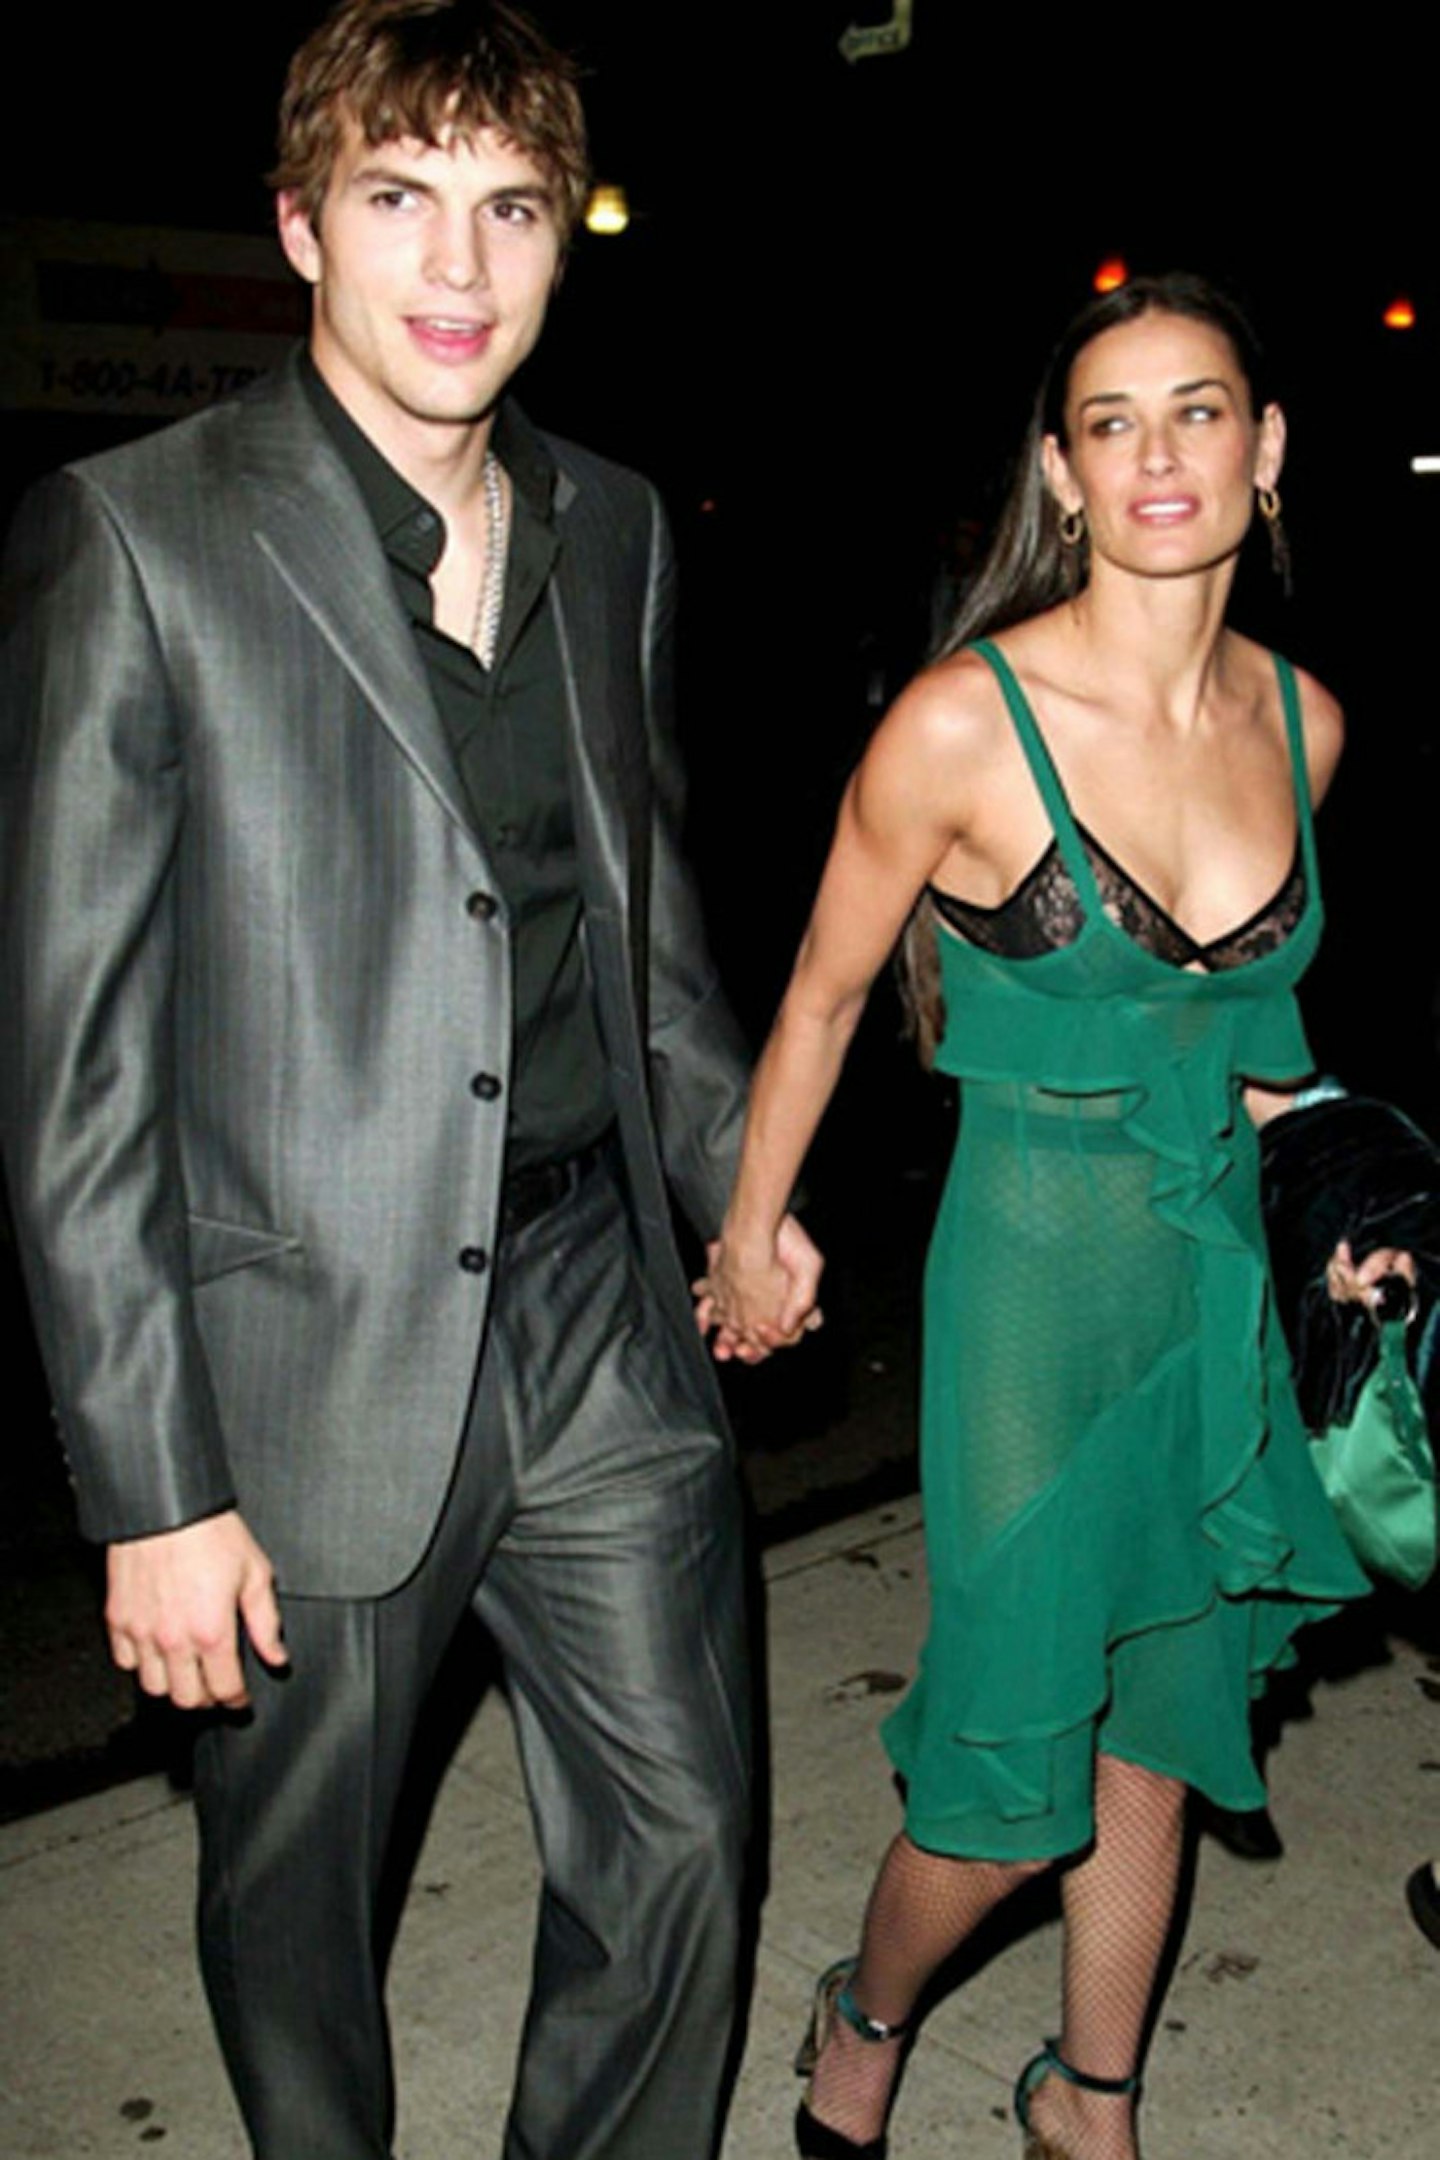 2003: Ashton starts dating Demi Moore